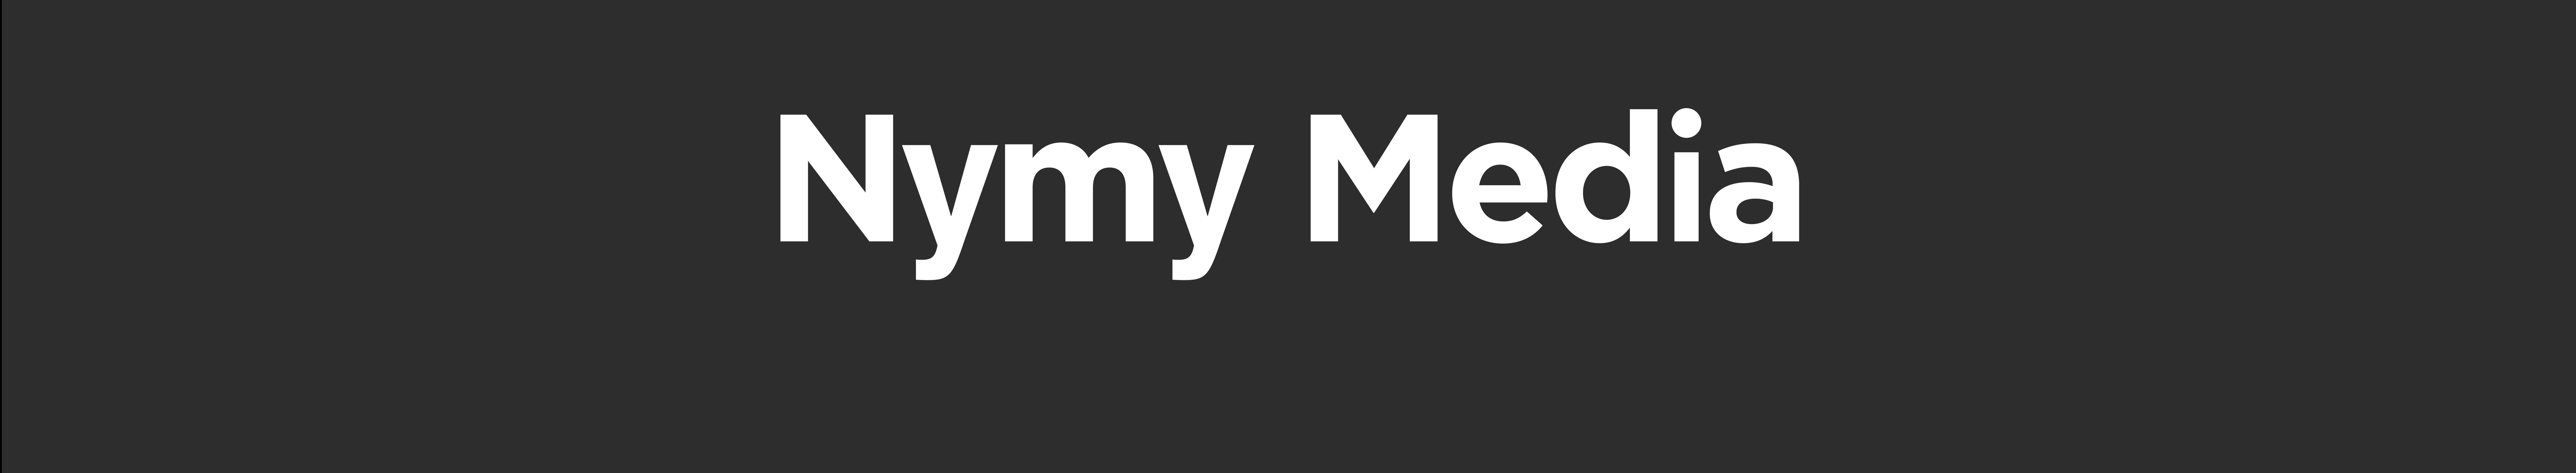 Nymy Media's profile banner